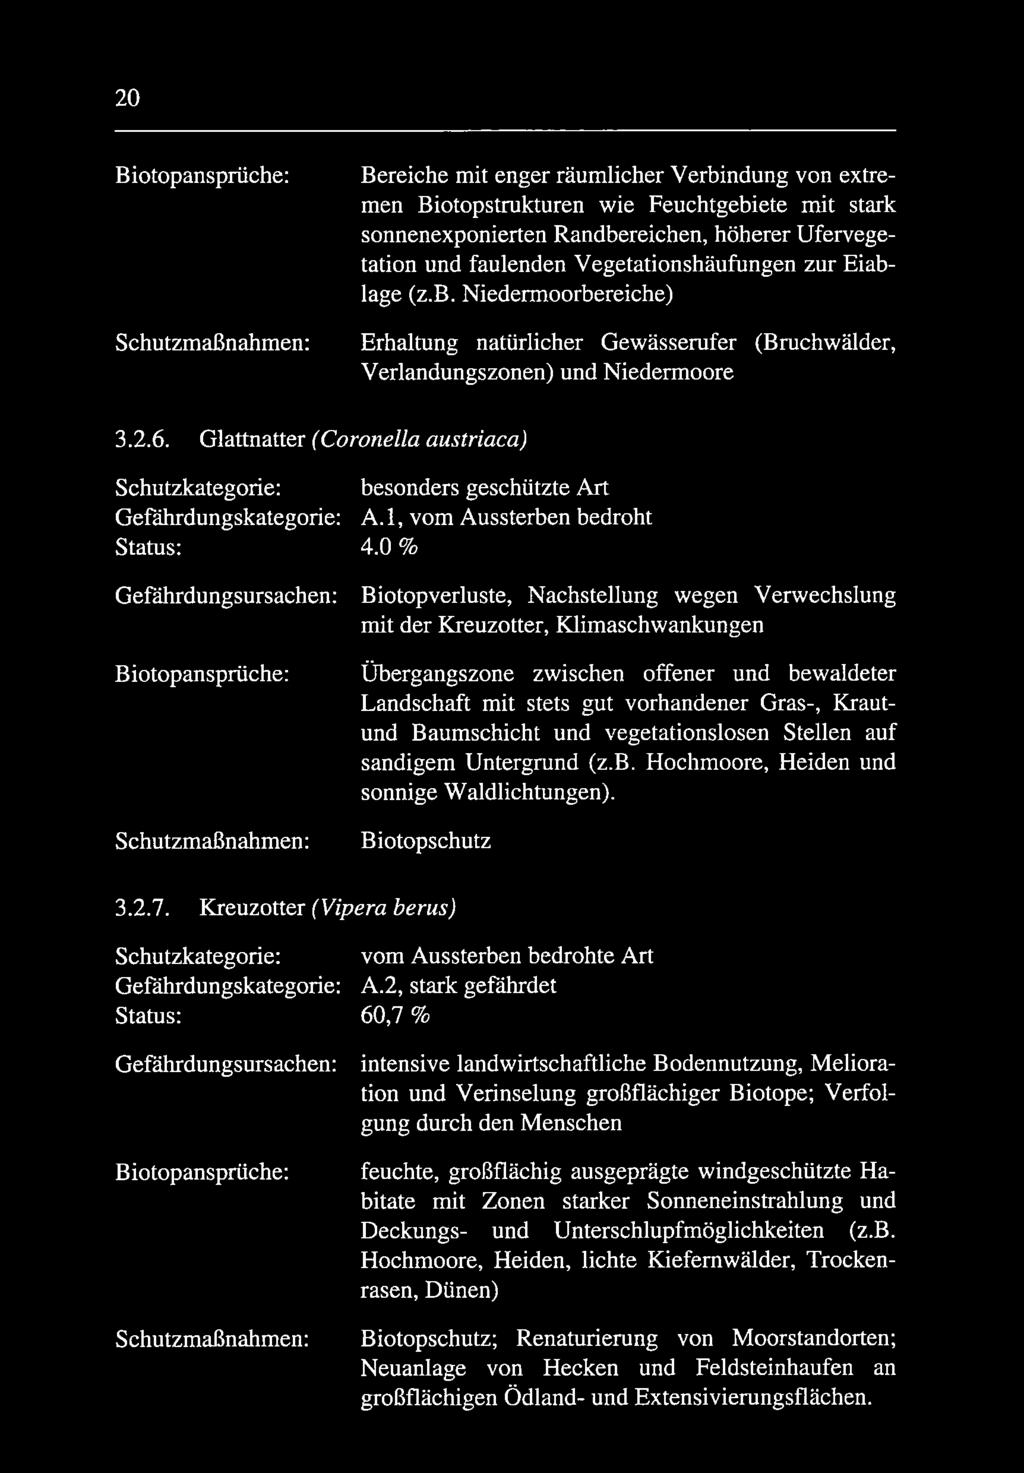 Glattnatter (Coronella austriaca) Schutzkategorie: besonders geschützte Art Gefährdungskategorie: A. 1, vom Aussterben bedroht Status: 4.